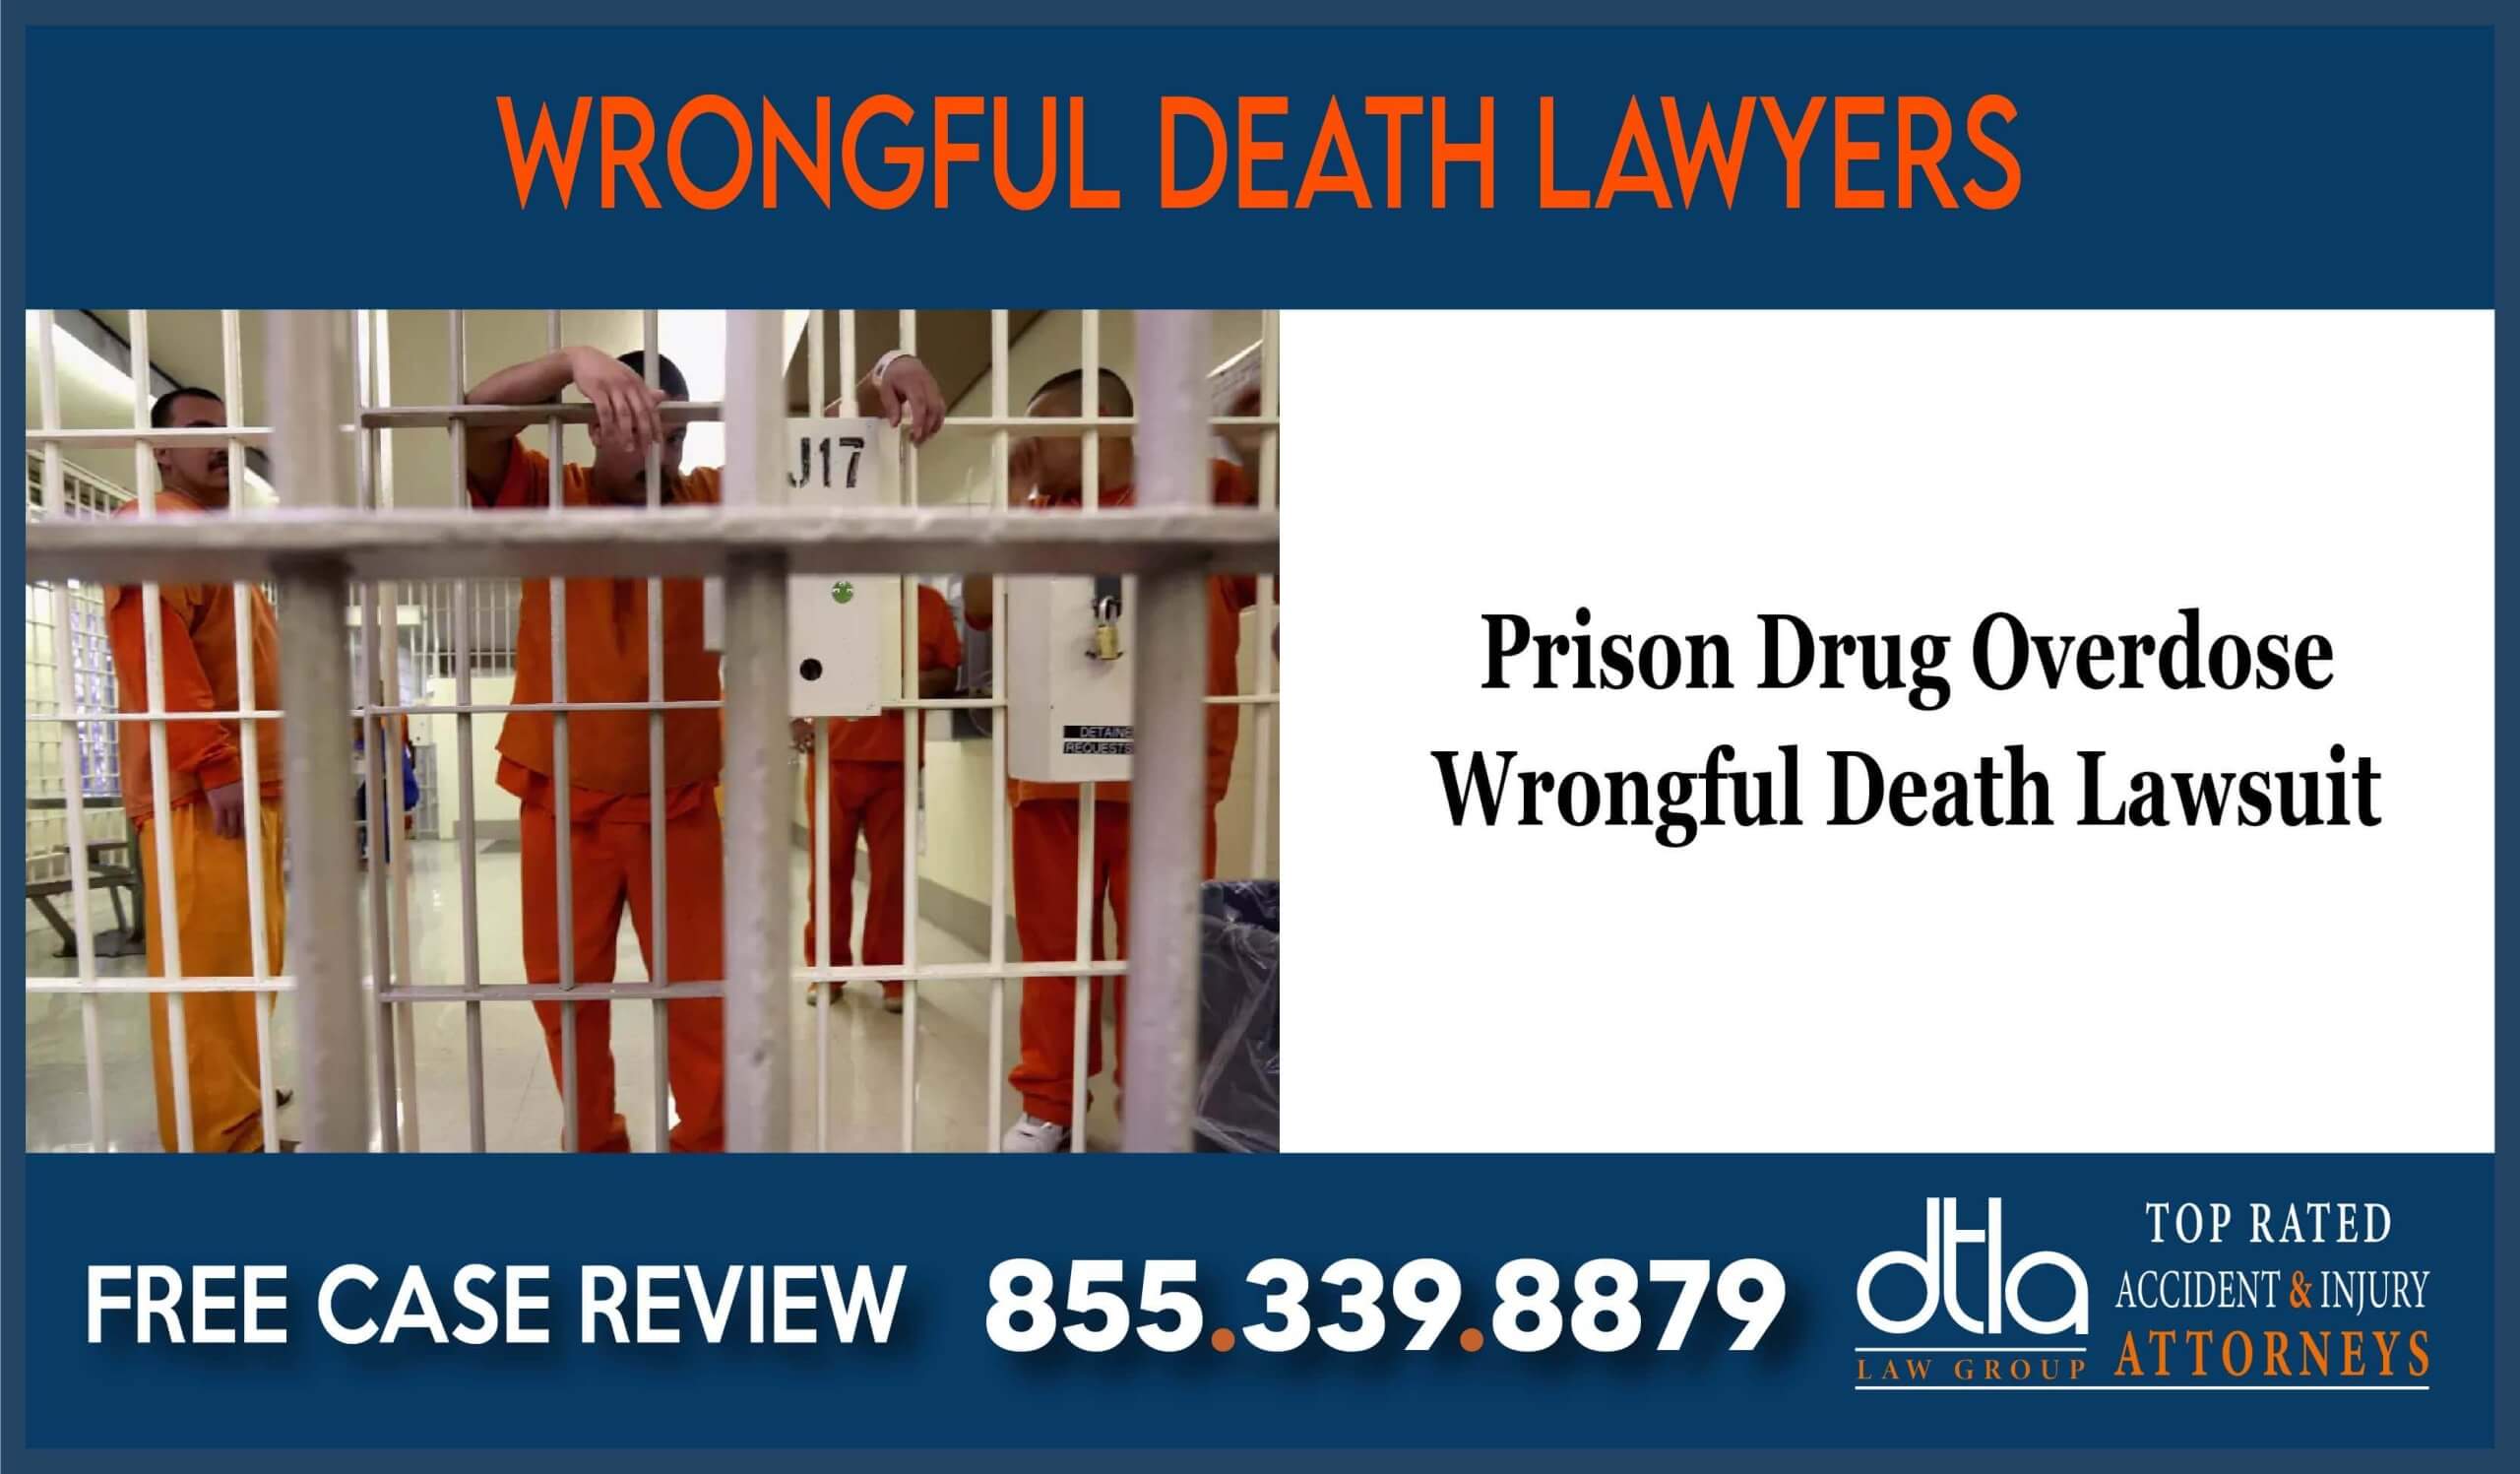 Prison Drug Overdose - Wrongful Death Lawsuit Attorney lawyer sue compensation liability